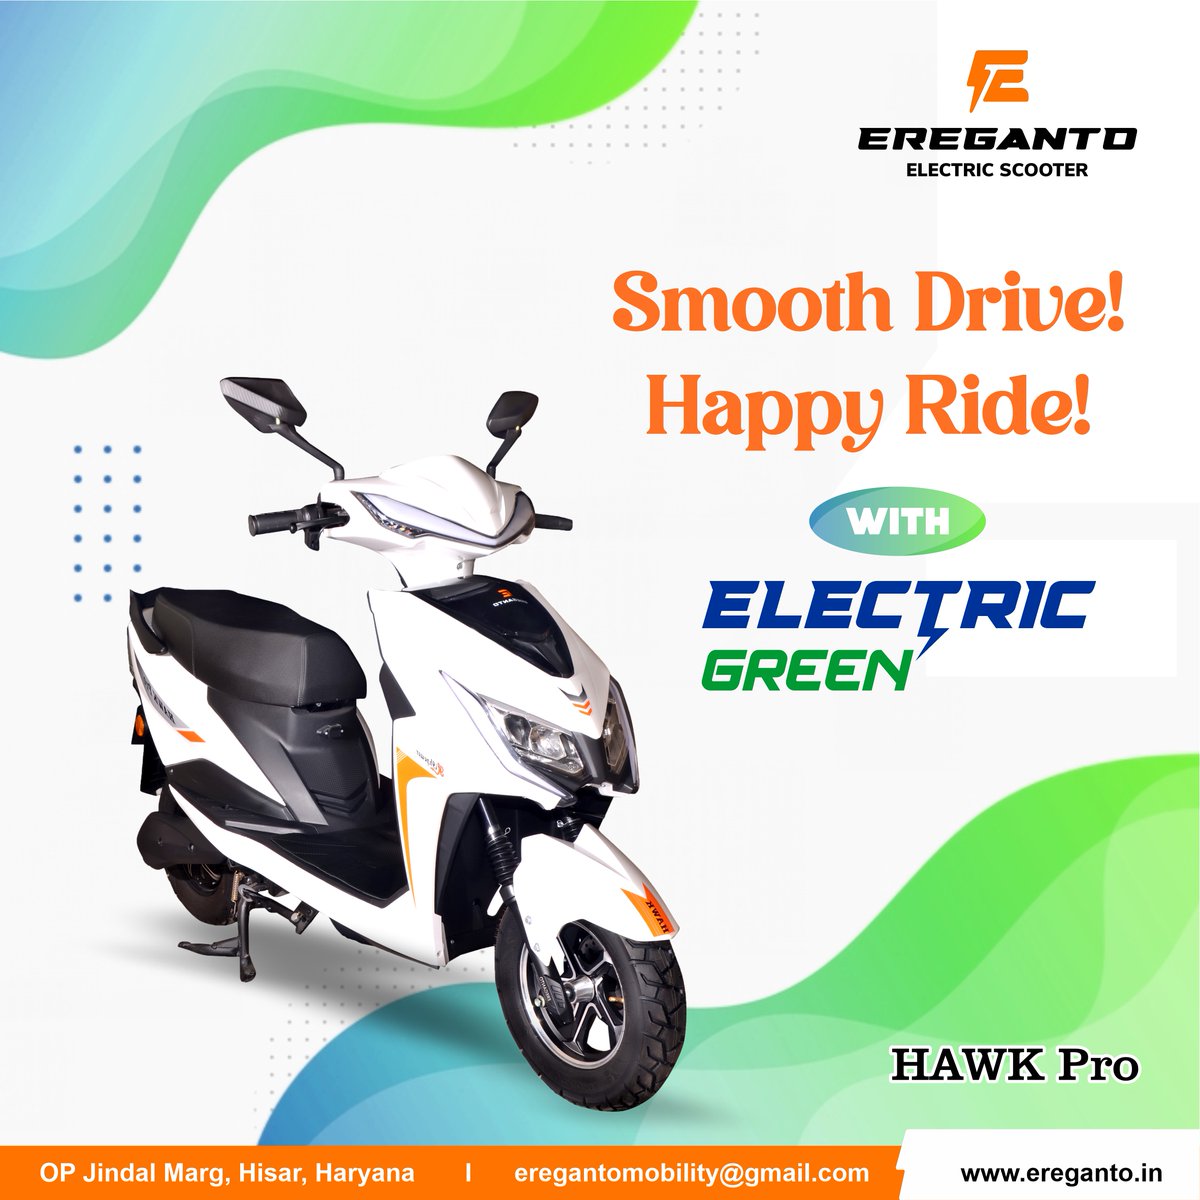 Smooth Drive, Happy Ride!
Ereganto E-Bikes🛵
.
#ereganto #eregantoelectricscooter #gogreenelectric #electric #enjoylife #scooty #scooter #TheFutureIsElectric #PowertheChange #BestEScooterInIndia #MakeTheSmartMove #ElectricIsTheFuture #SwitchToElectric